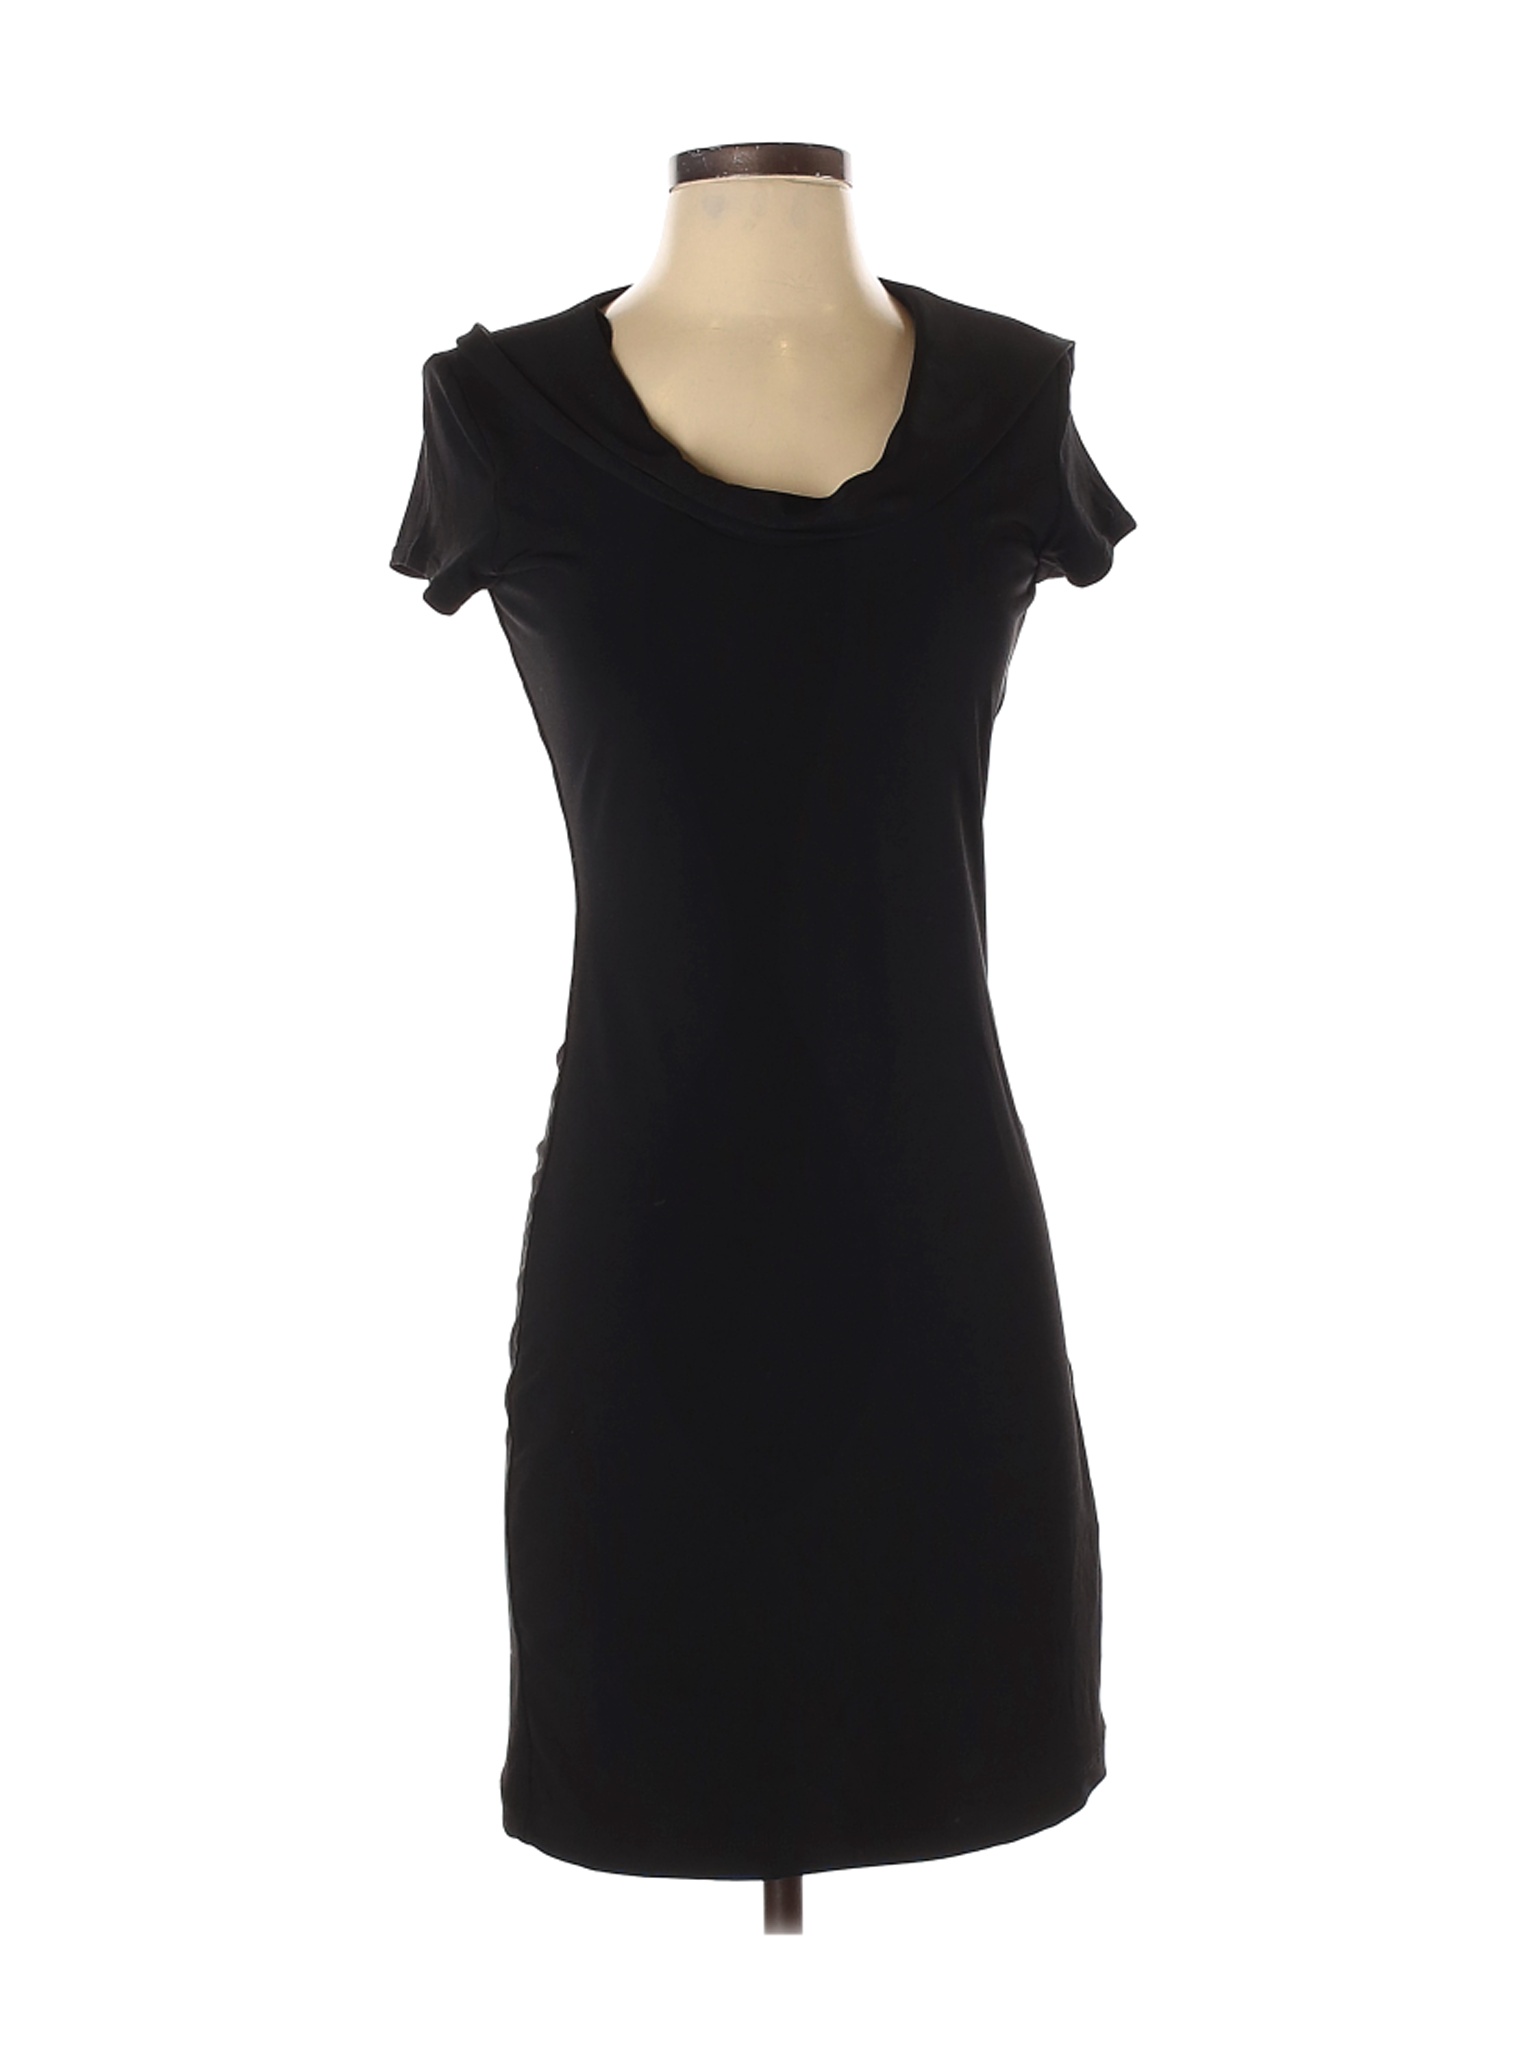 NWT Philosophy Republic Clothing Women Black Casual Dress XS | eBay